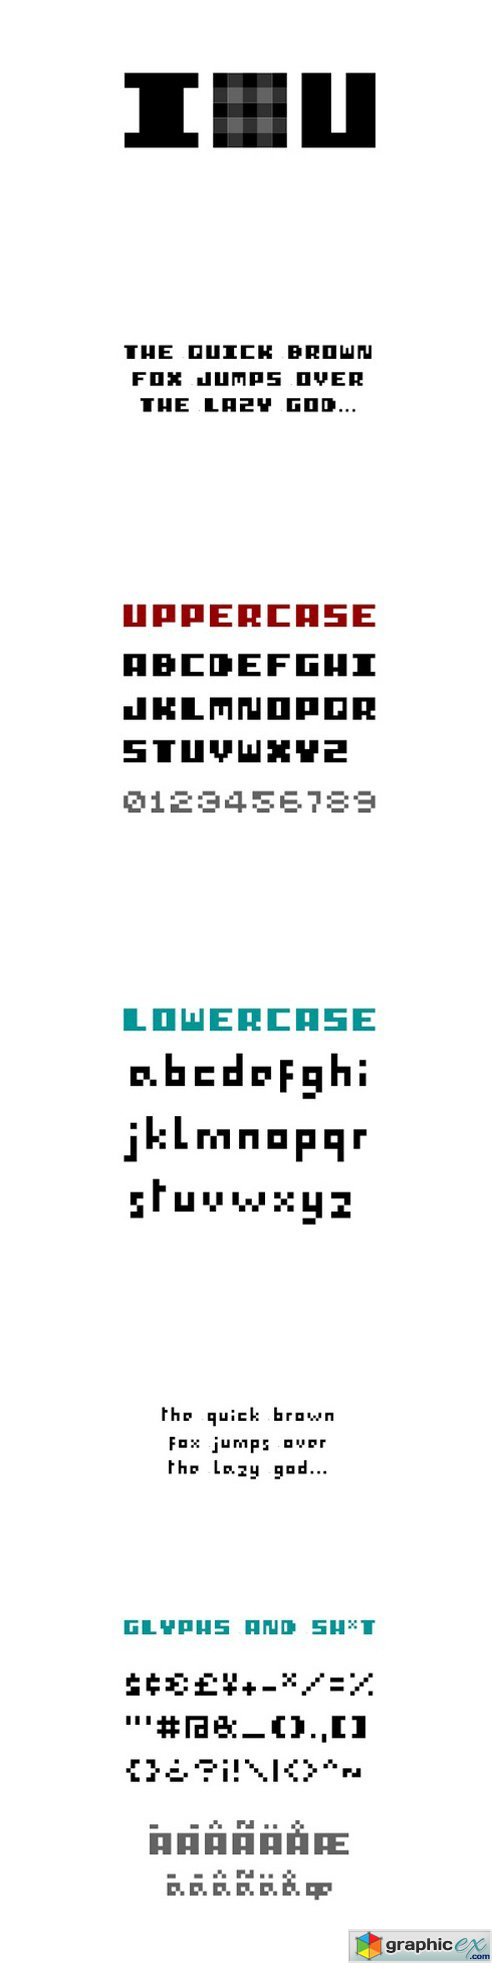 I PIXEL U - Typeface